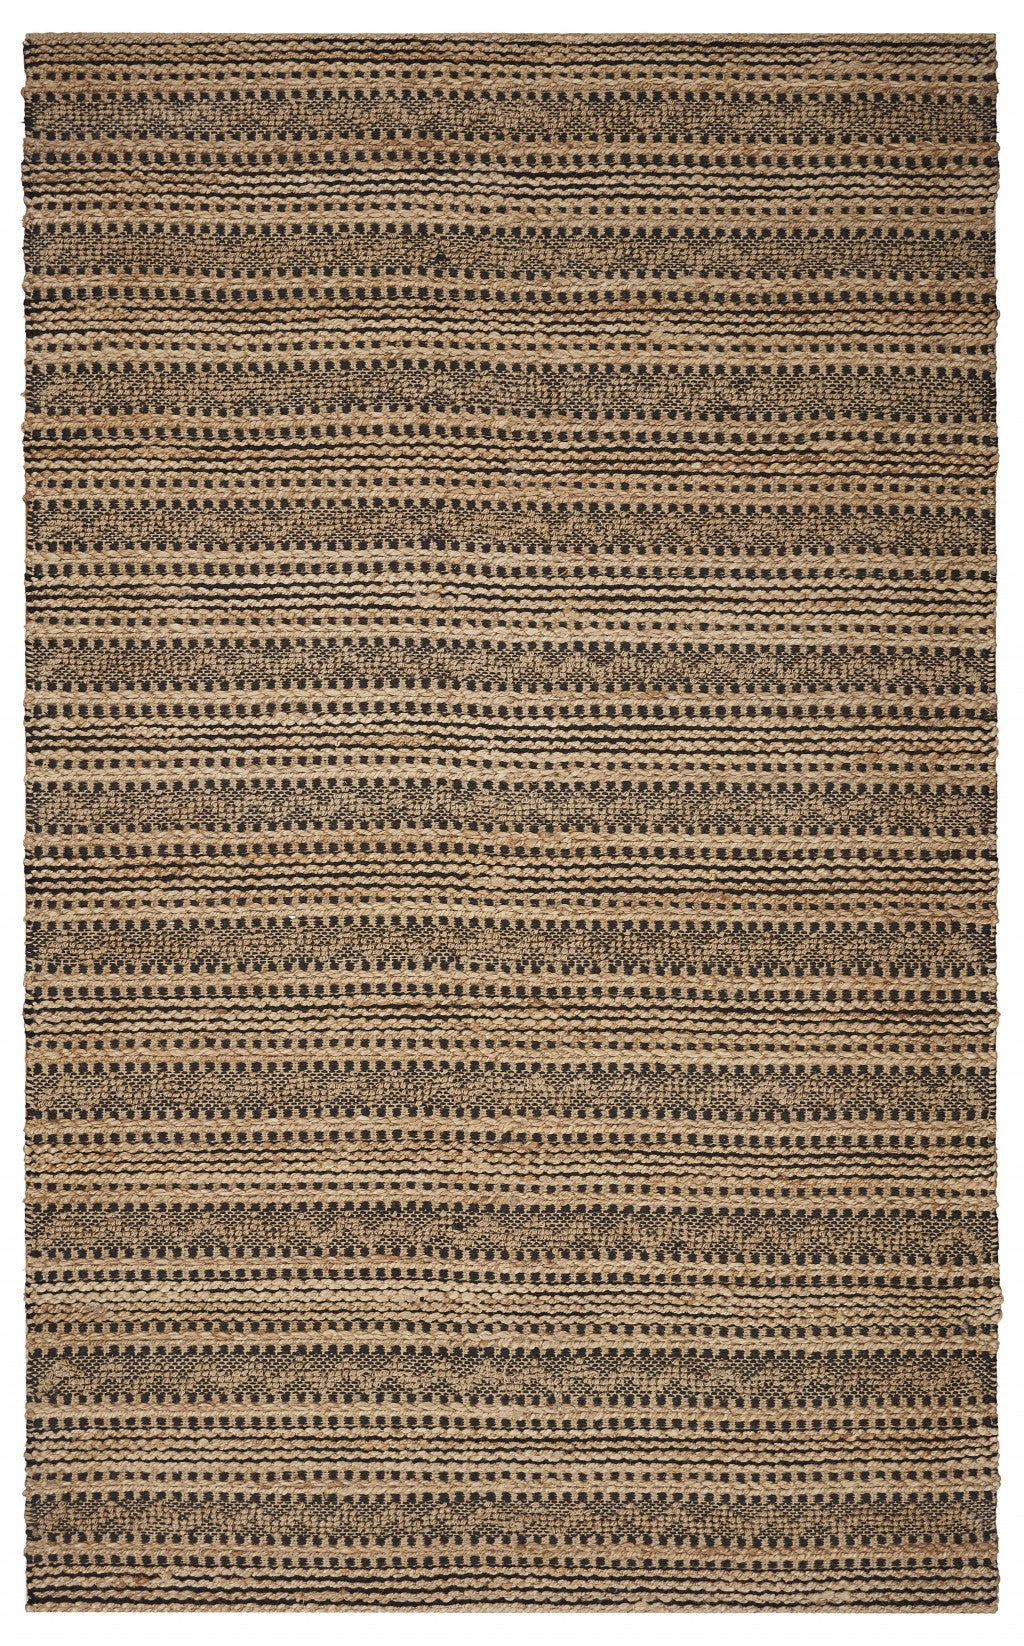 5’ x 8’ Tan and Black Intricate Striped Area Rug